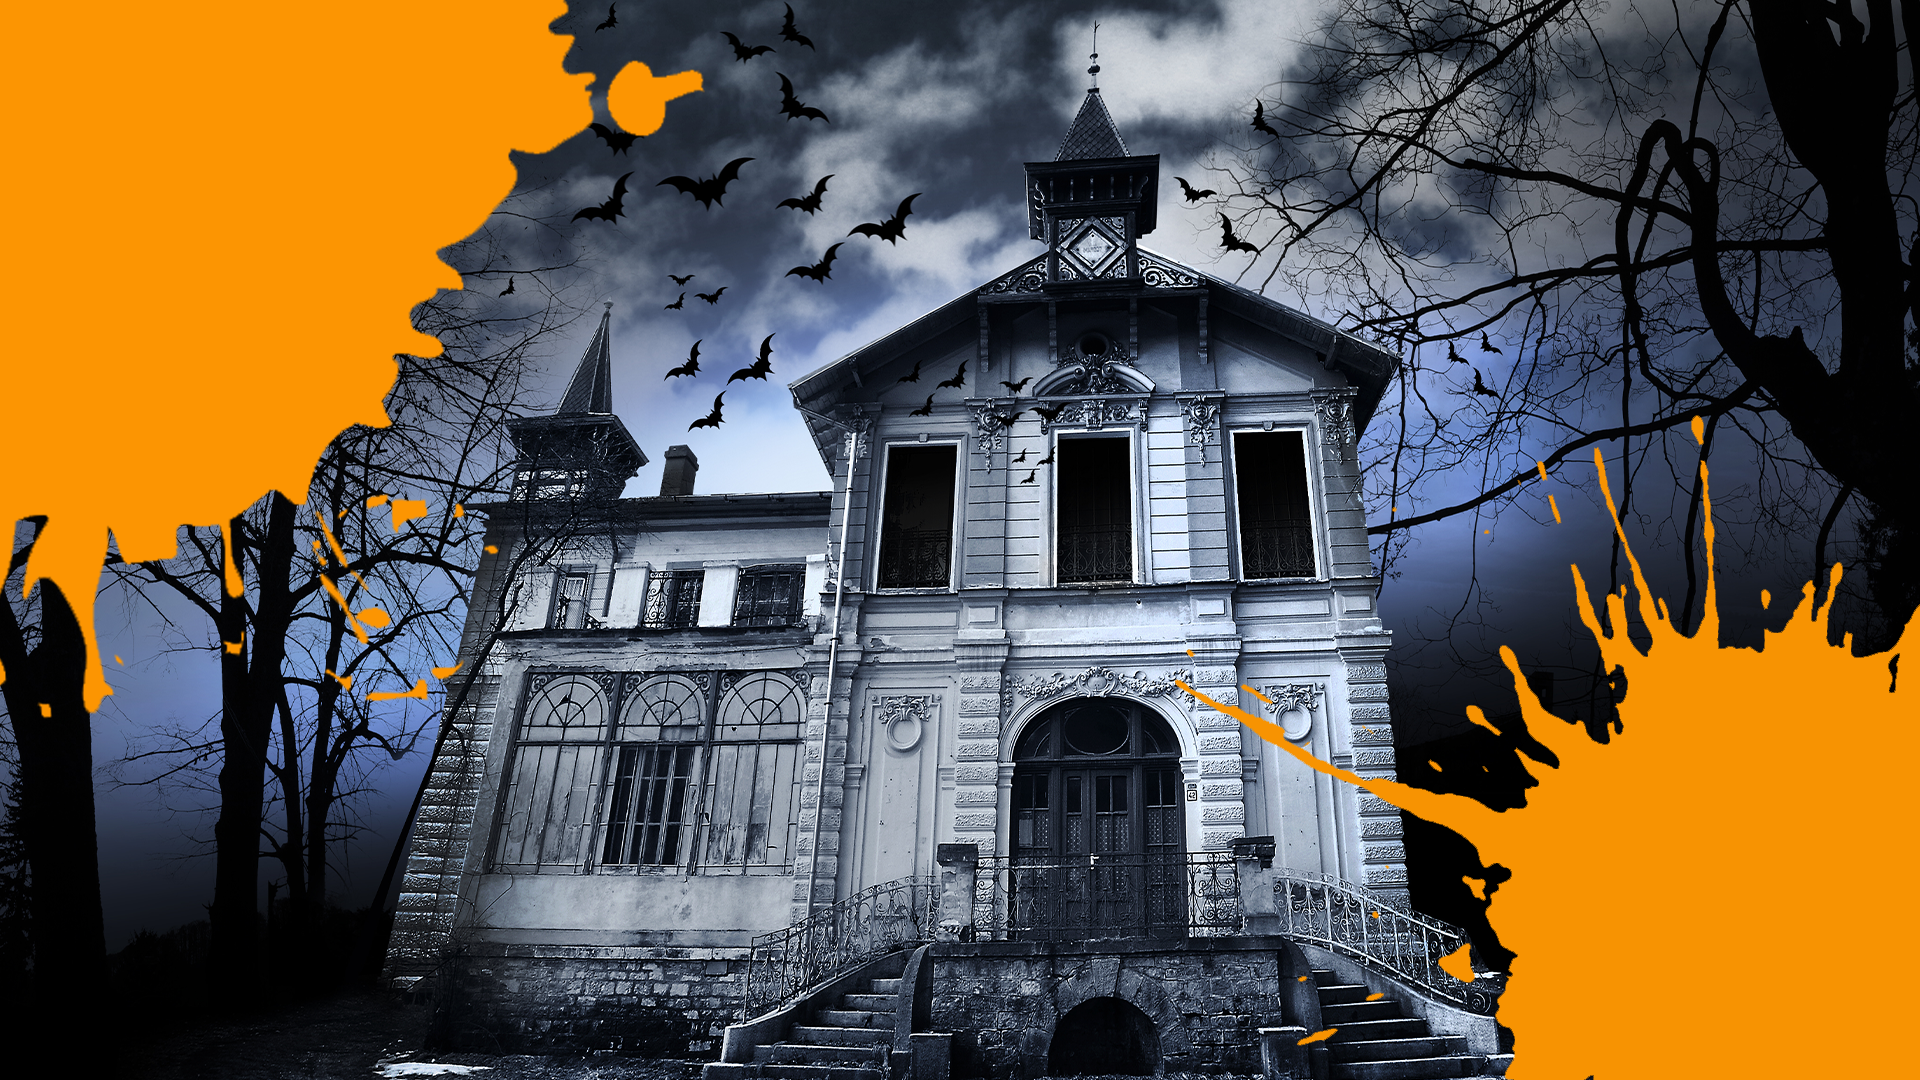 Spooky house with orange splats